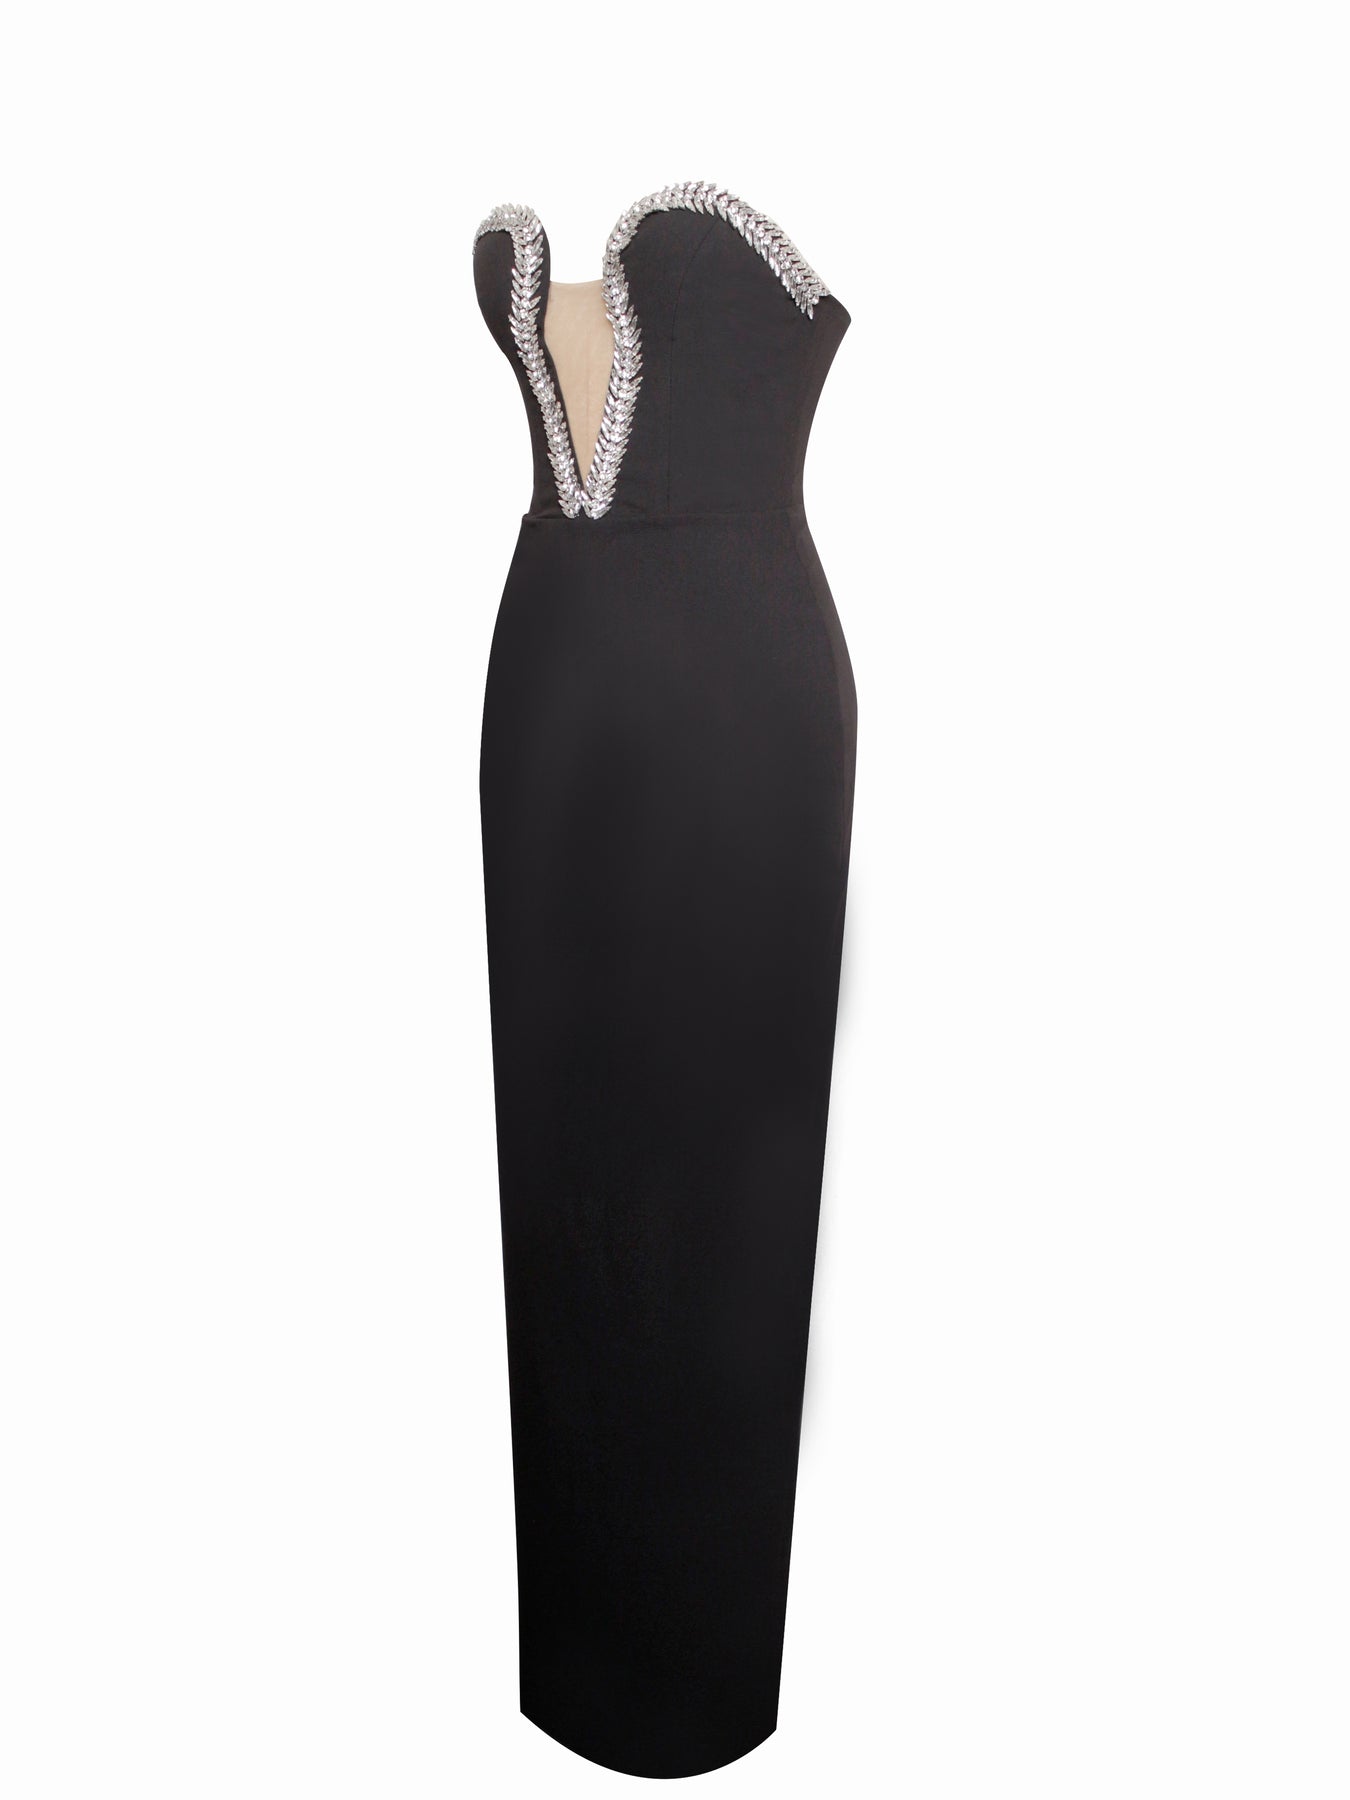 Summer Tube Top V-neck Diamond Black Bandage One-piece Dress aclosy